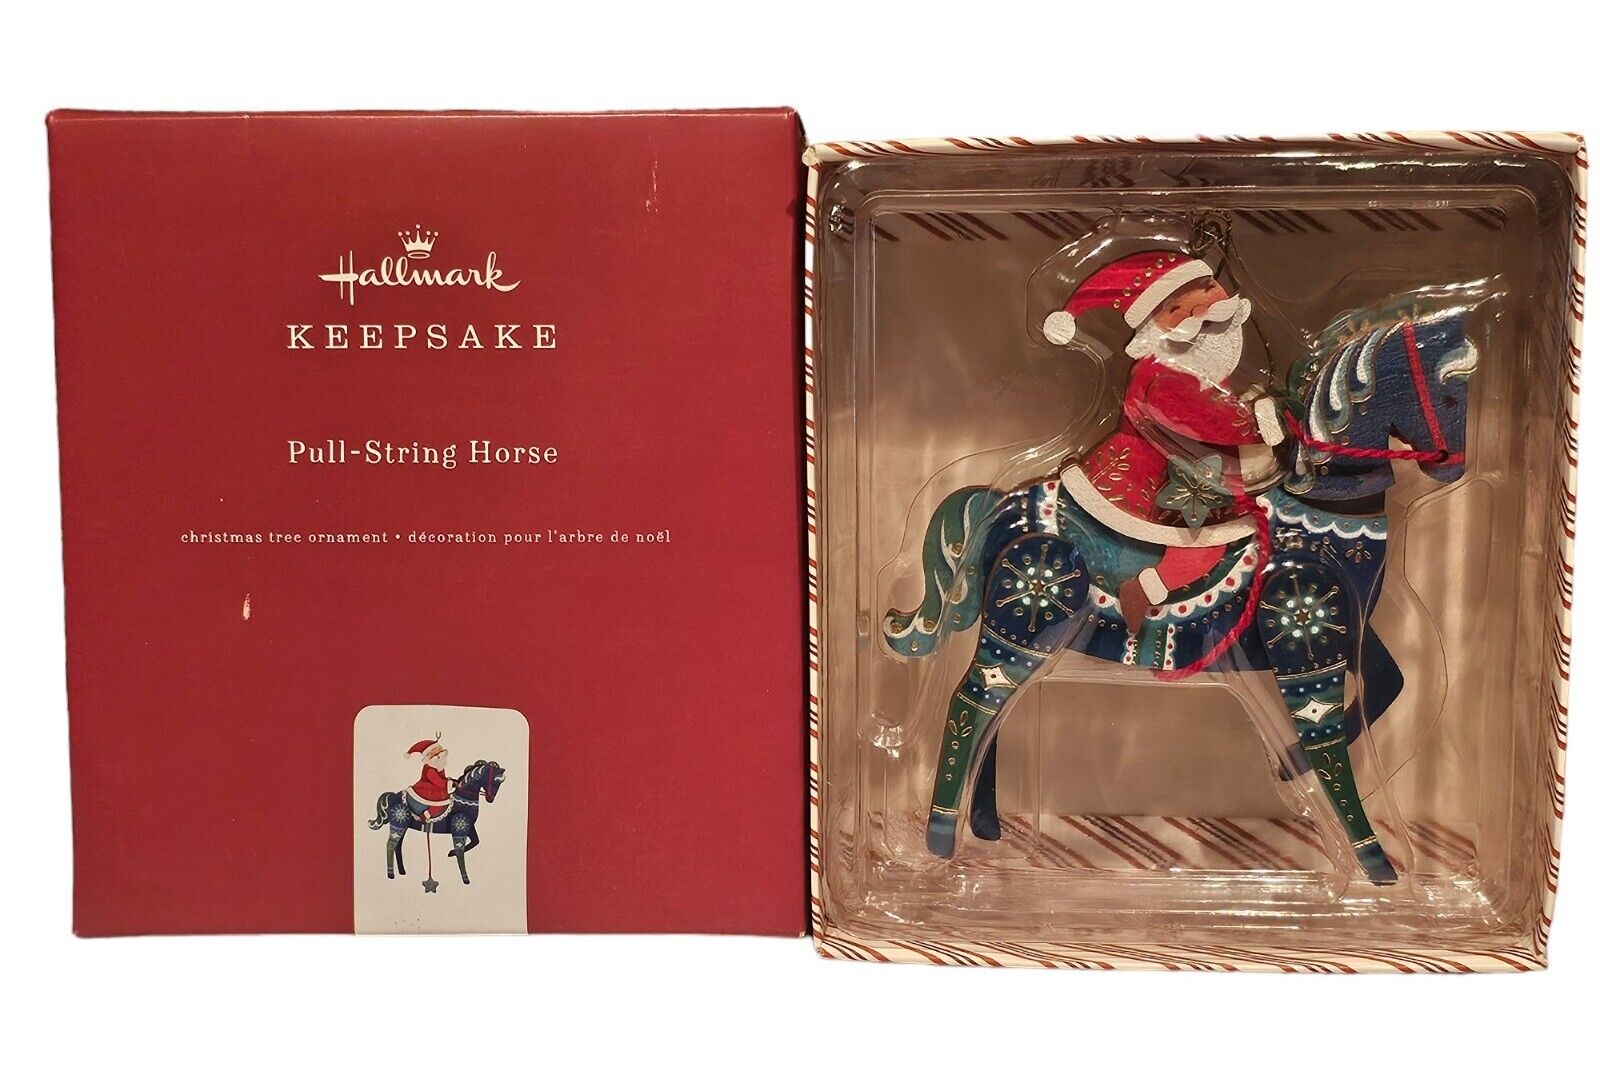 Rare 2019 Hallmark Keepsake Premium Pull-String Horse with Santa Wooden Ornament